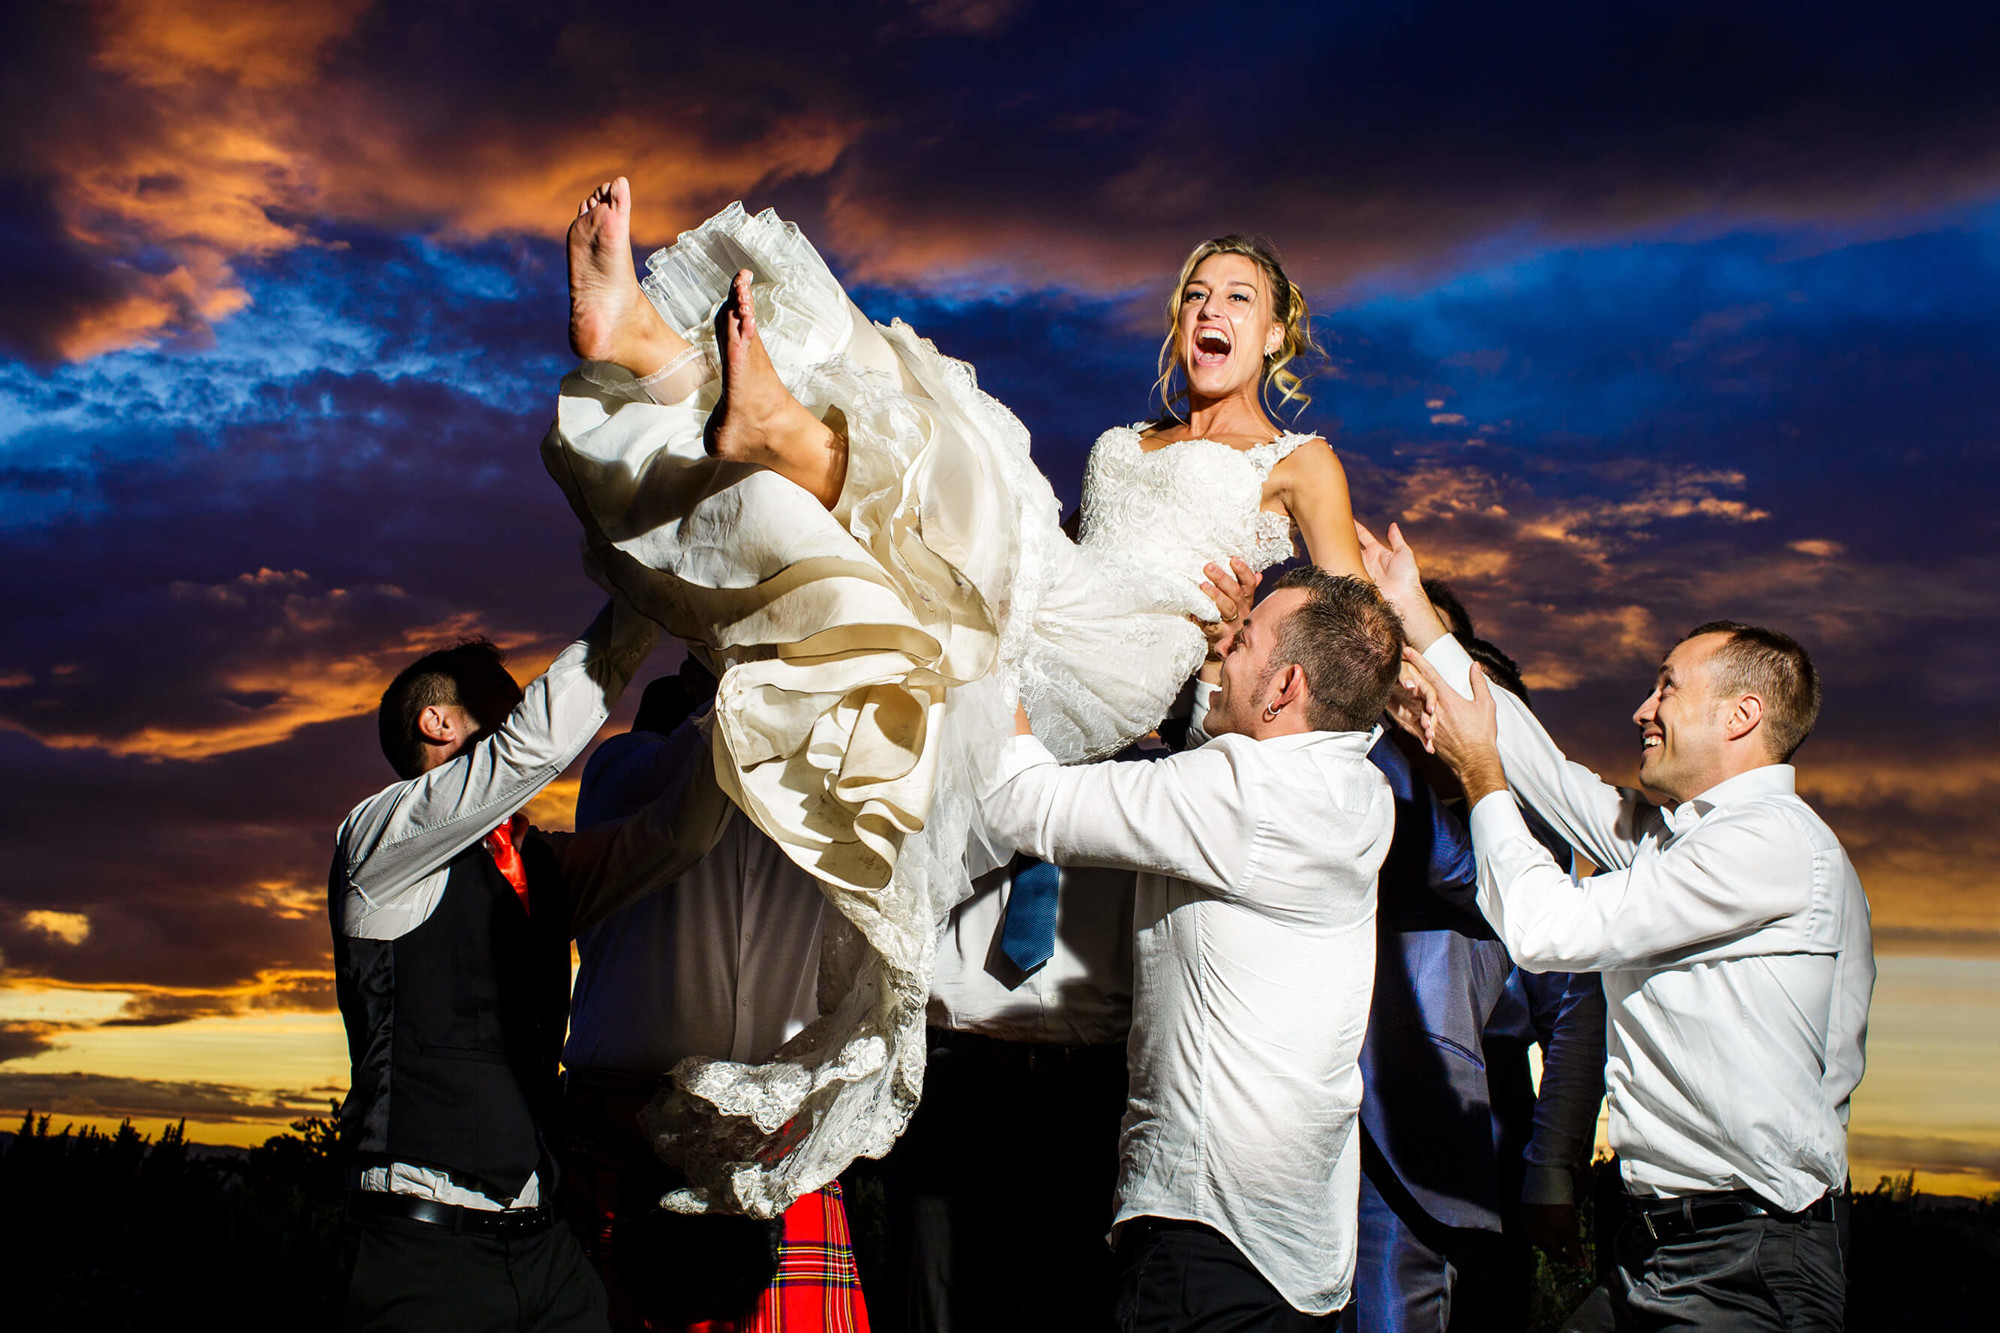 Nou Enfoc fotògrafs de boda de Vilafranca del Penedès a Barcelona - fotografo-boda-diferente-sin-posados-penedes.jpg